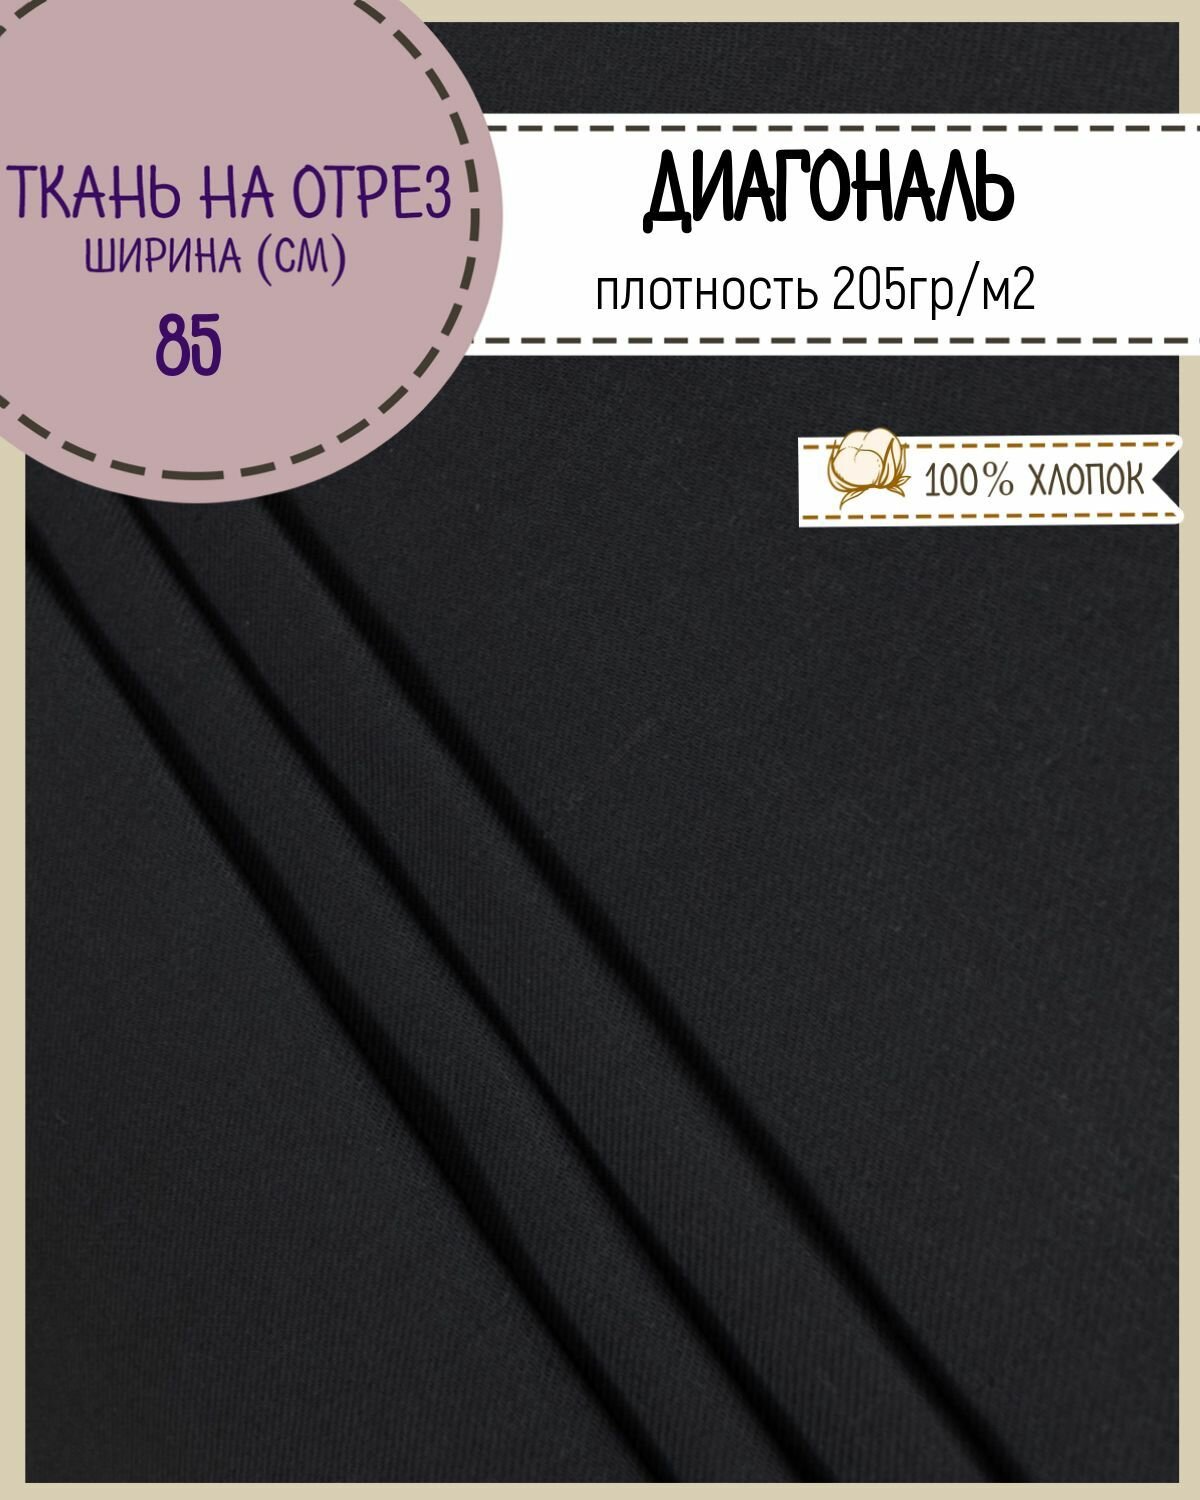 Ткань Диагональ, цв. черный, пл.205 г/м2, ш-85 см, на отрез, цена за пог. метр